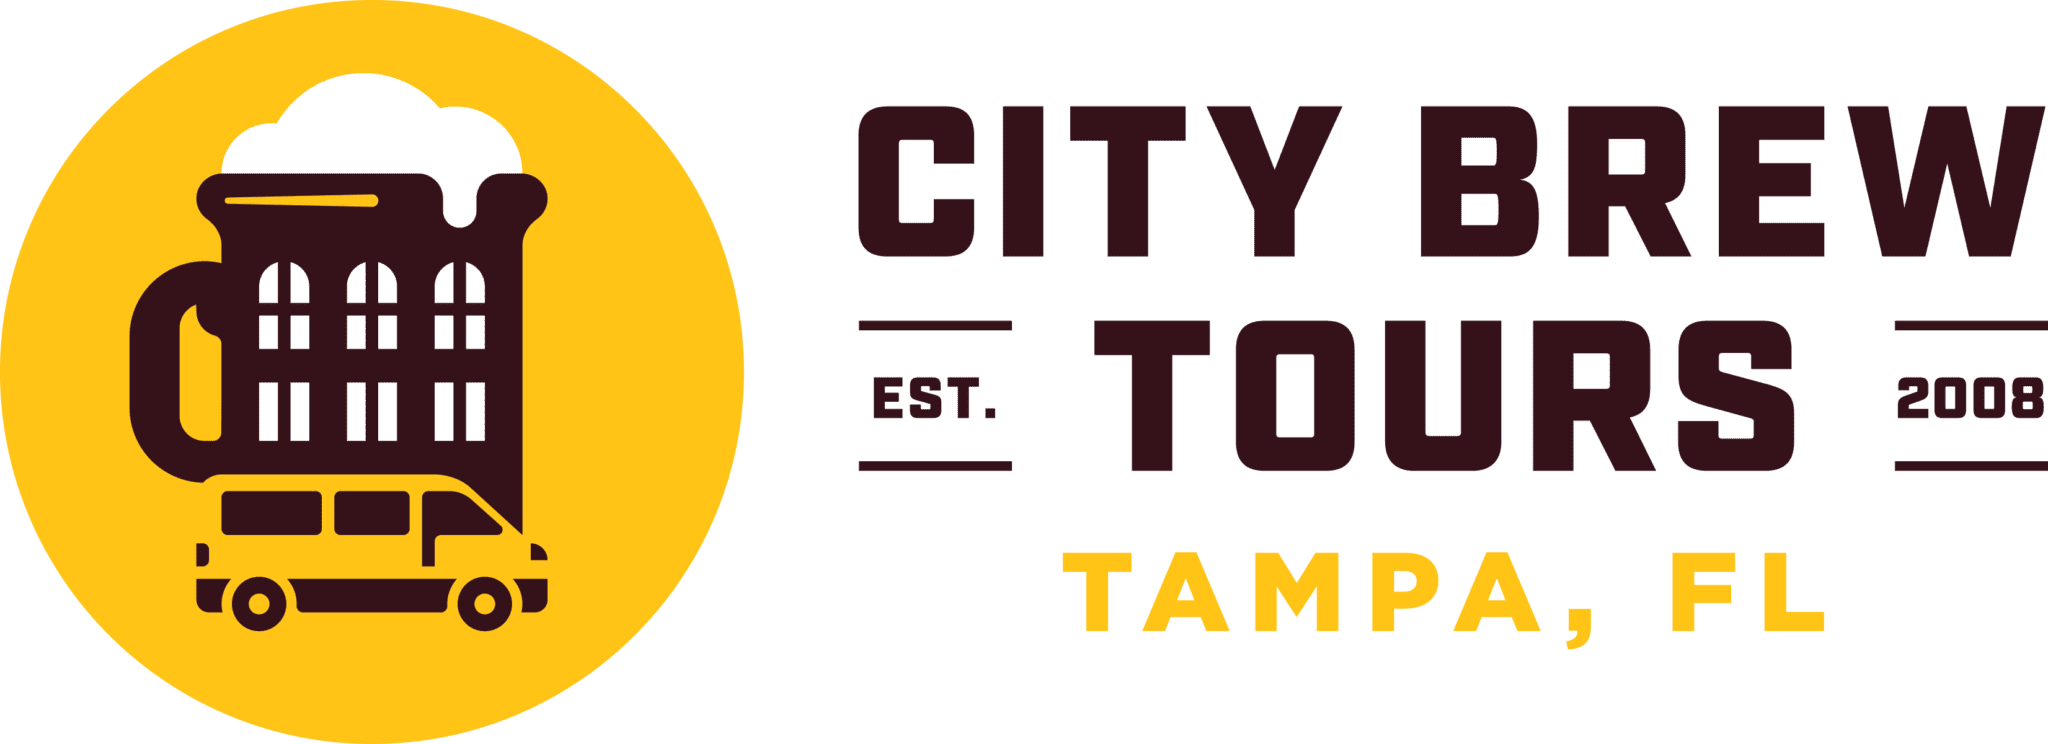 city brew tours tampa reviews